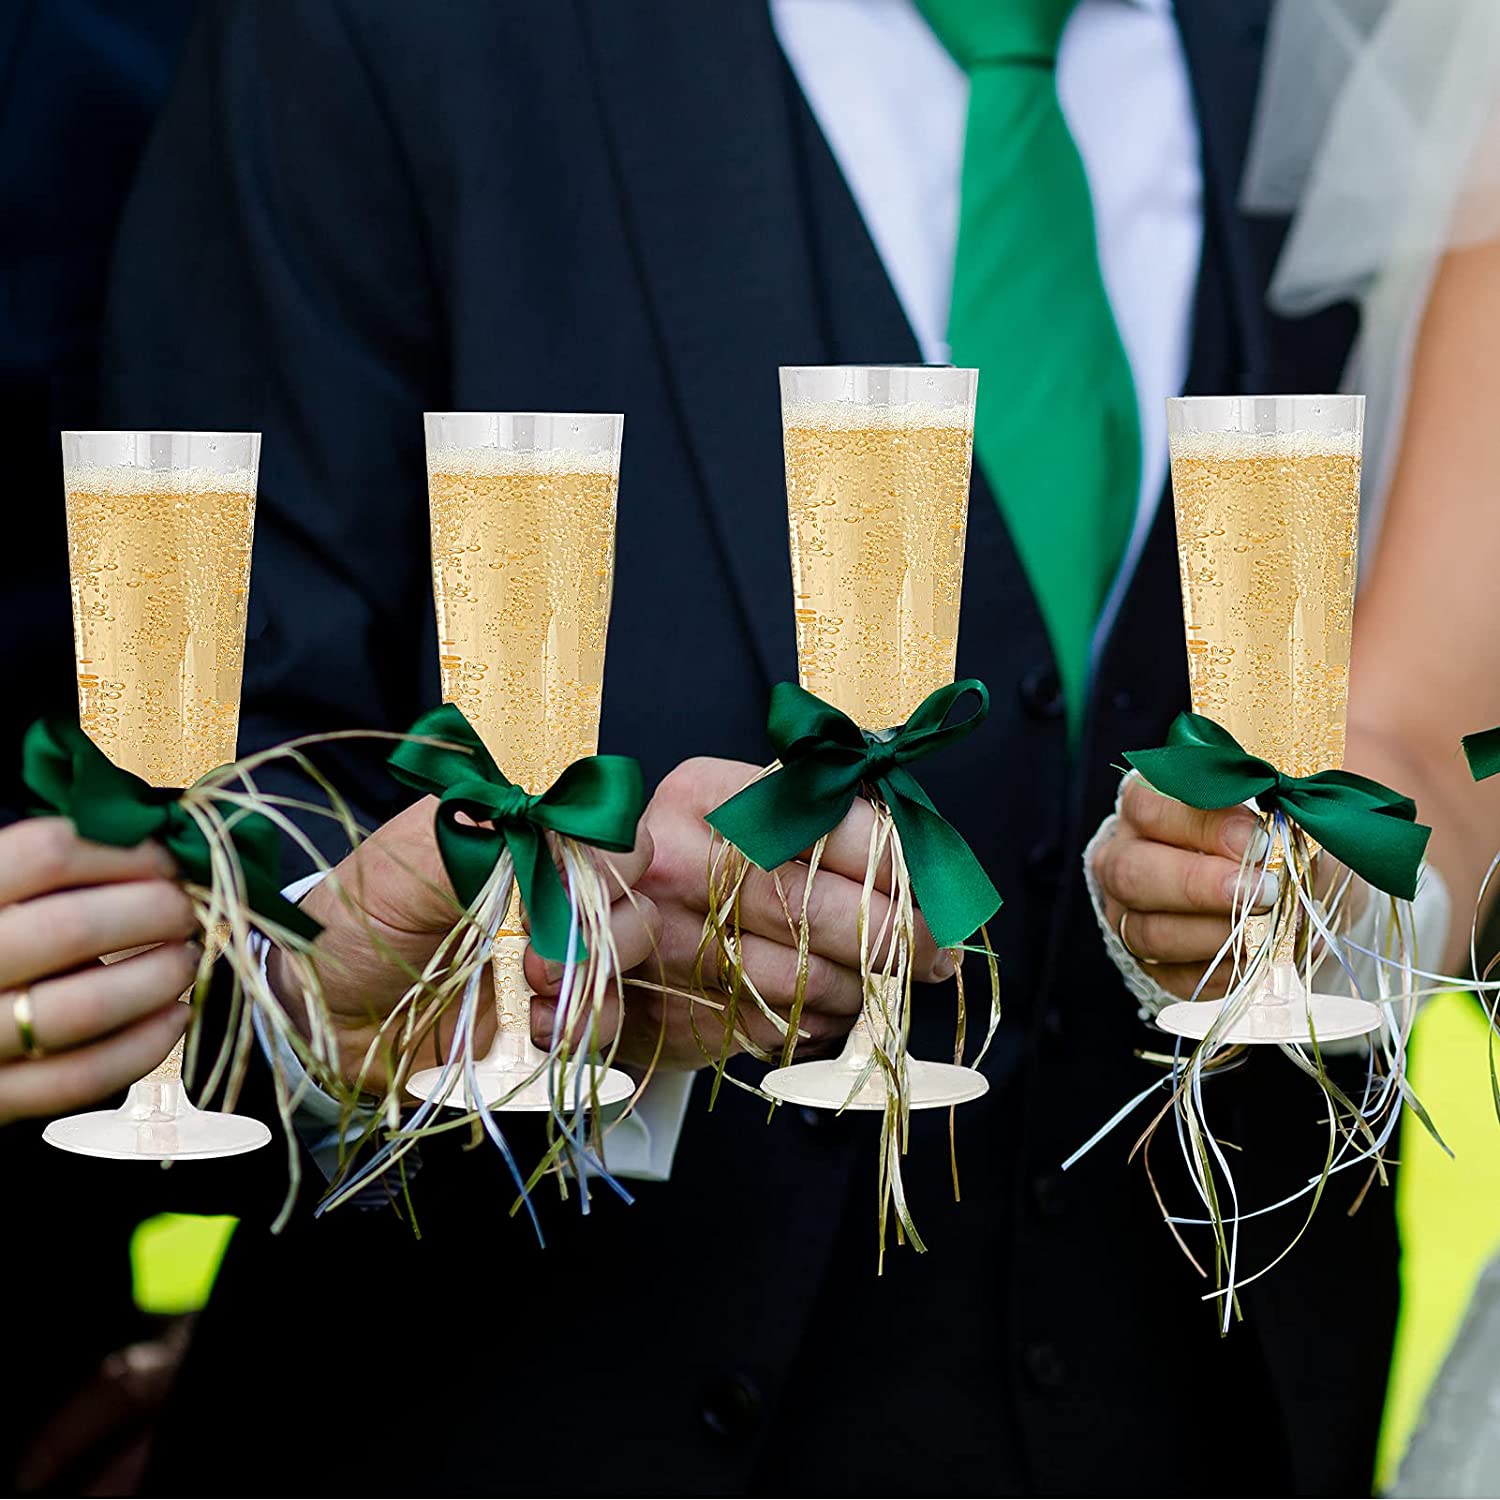 5oz. Plastic Champagne Flutes by Celebrate It™, 16ct. 